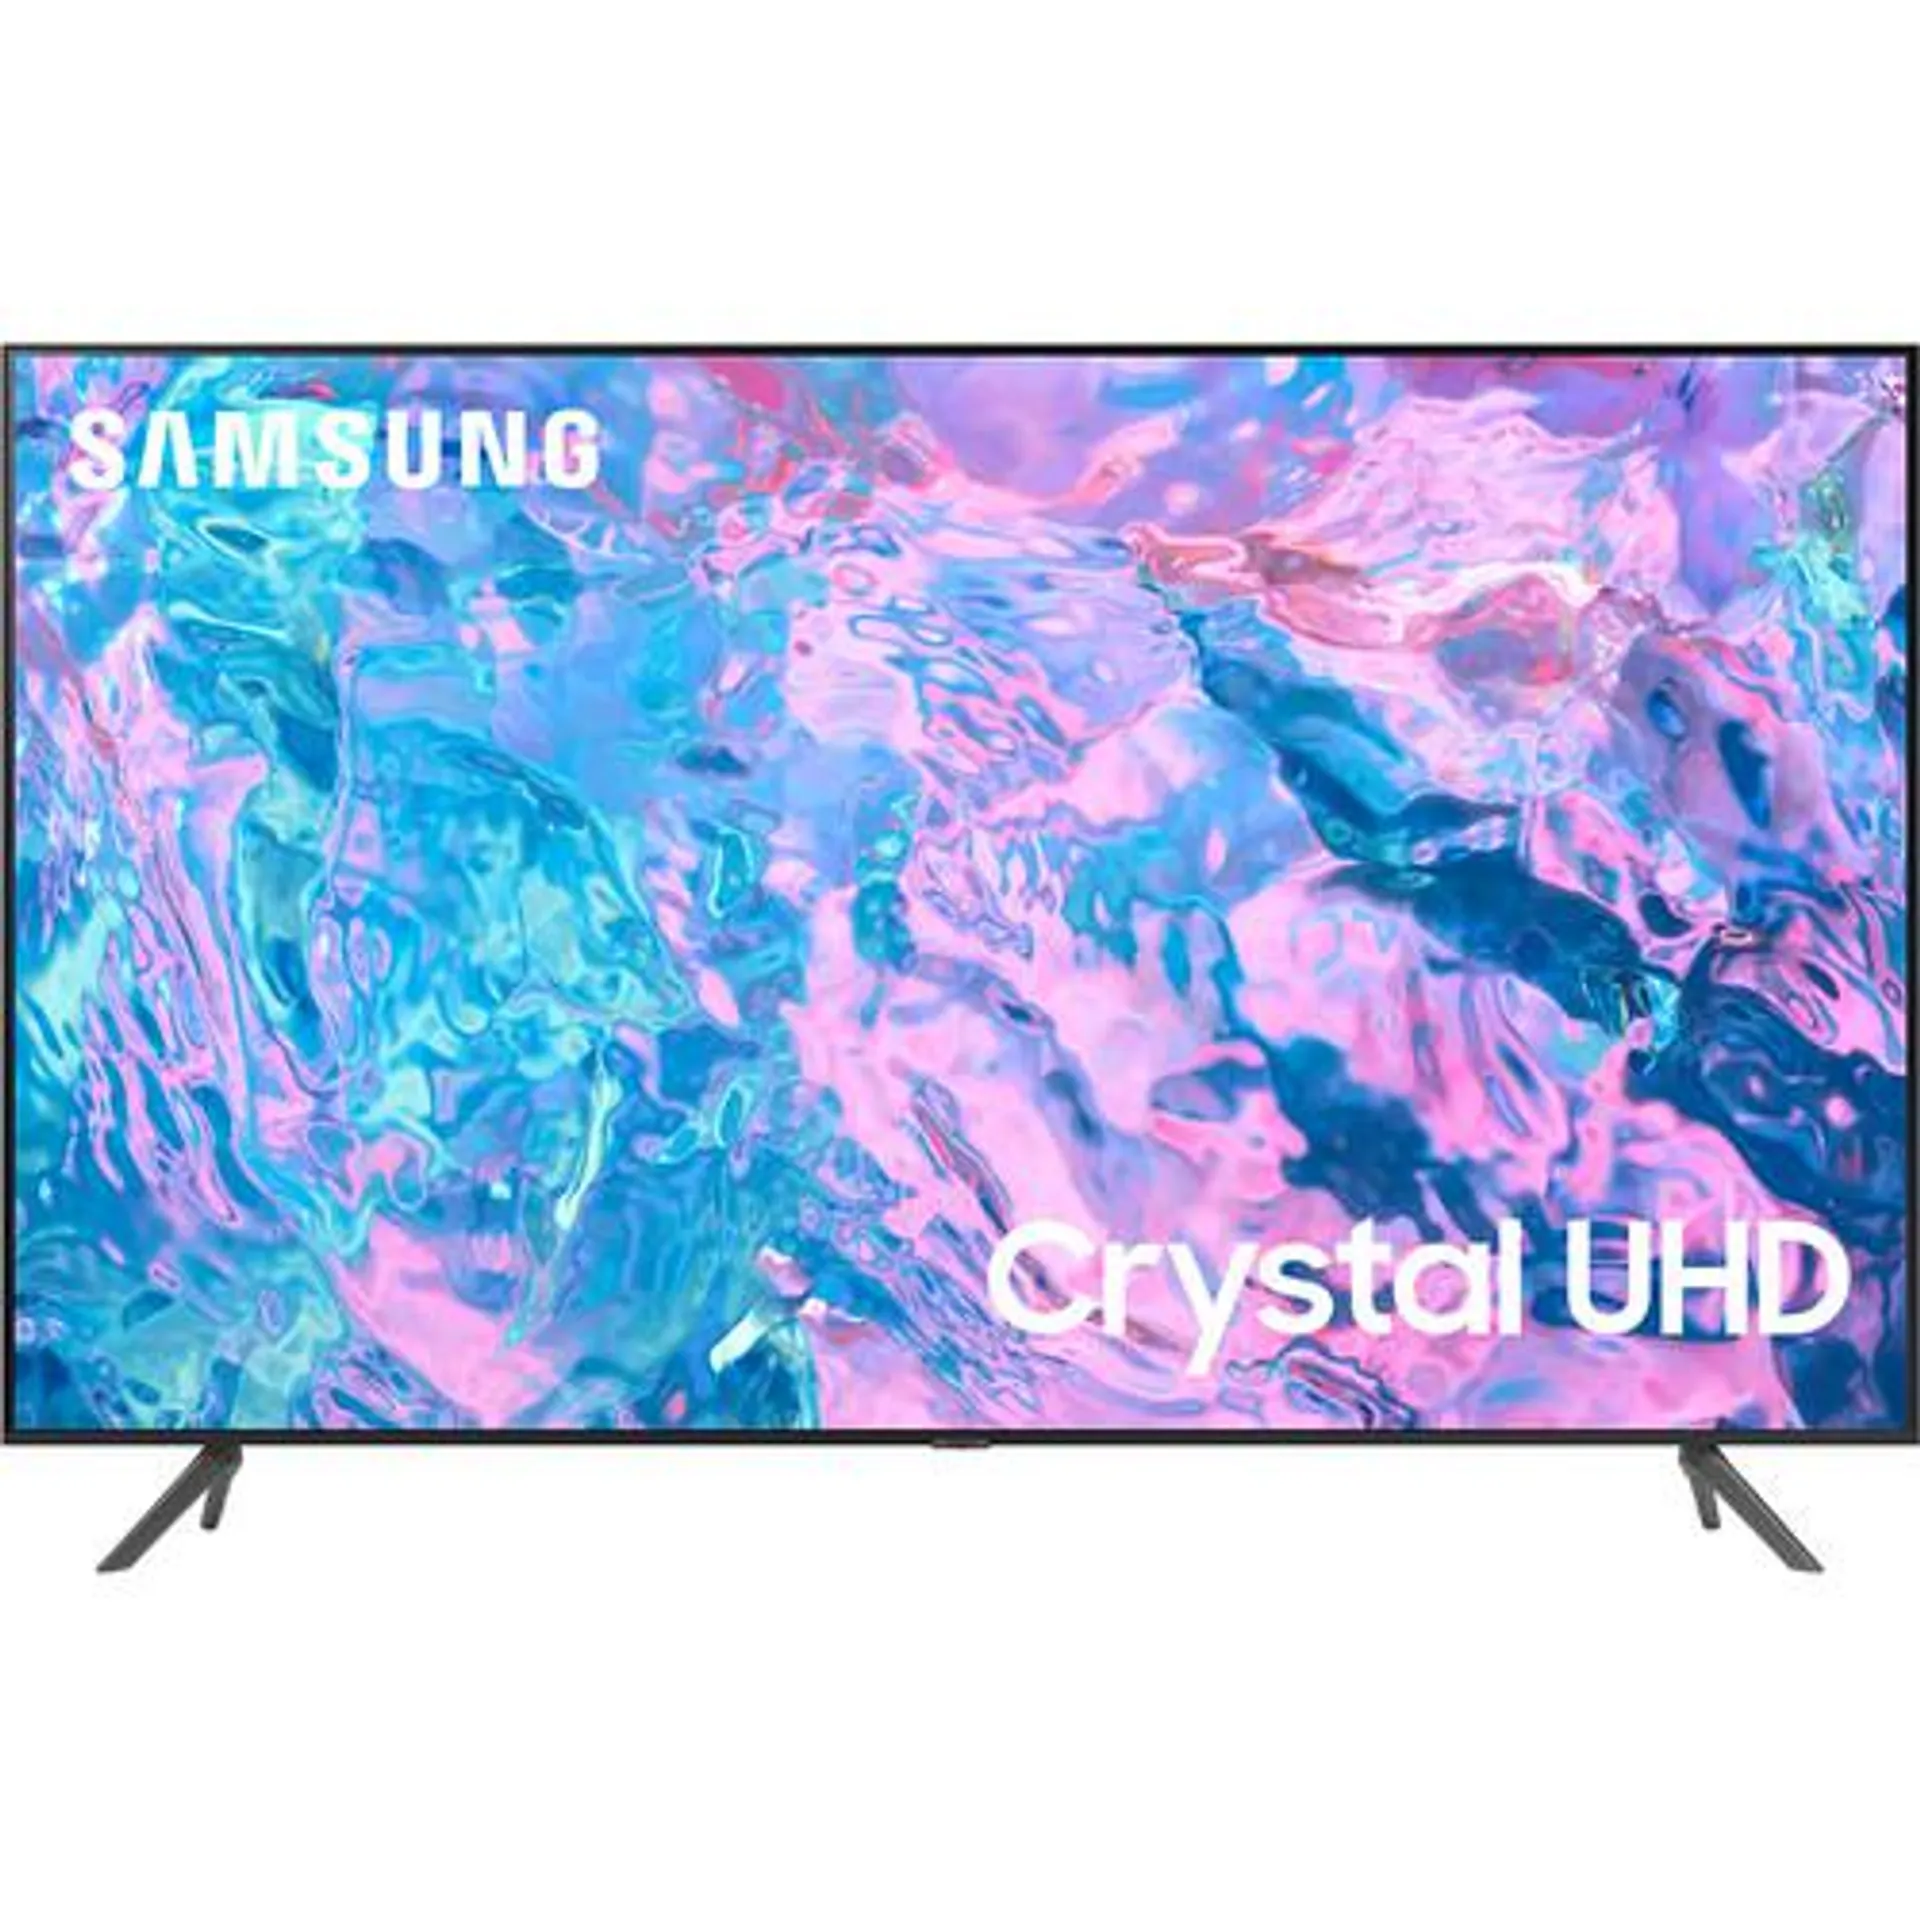 Samsung CU7000 Crystal UHD 55" 4K HDR Smart LED TV